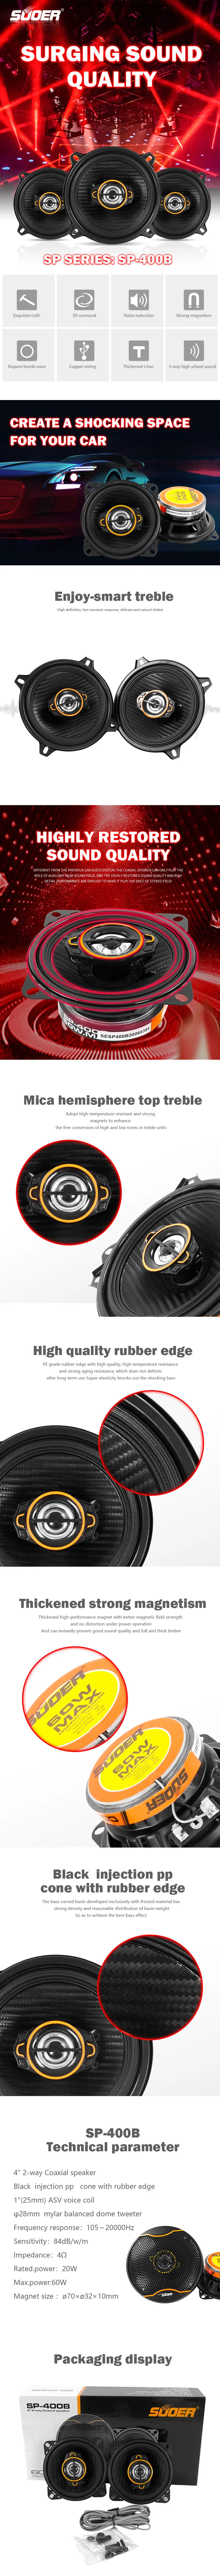 Suoer good price SP-400B 20w 4 inch black injection pp cone speaker for auto crossover auto speaker car speaker